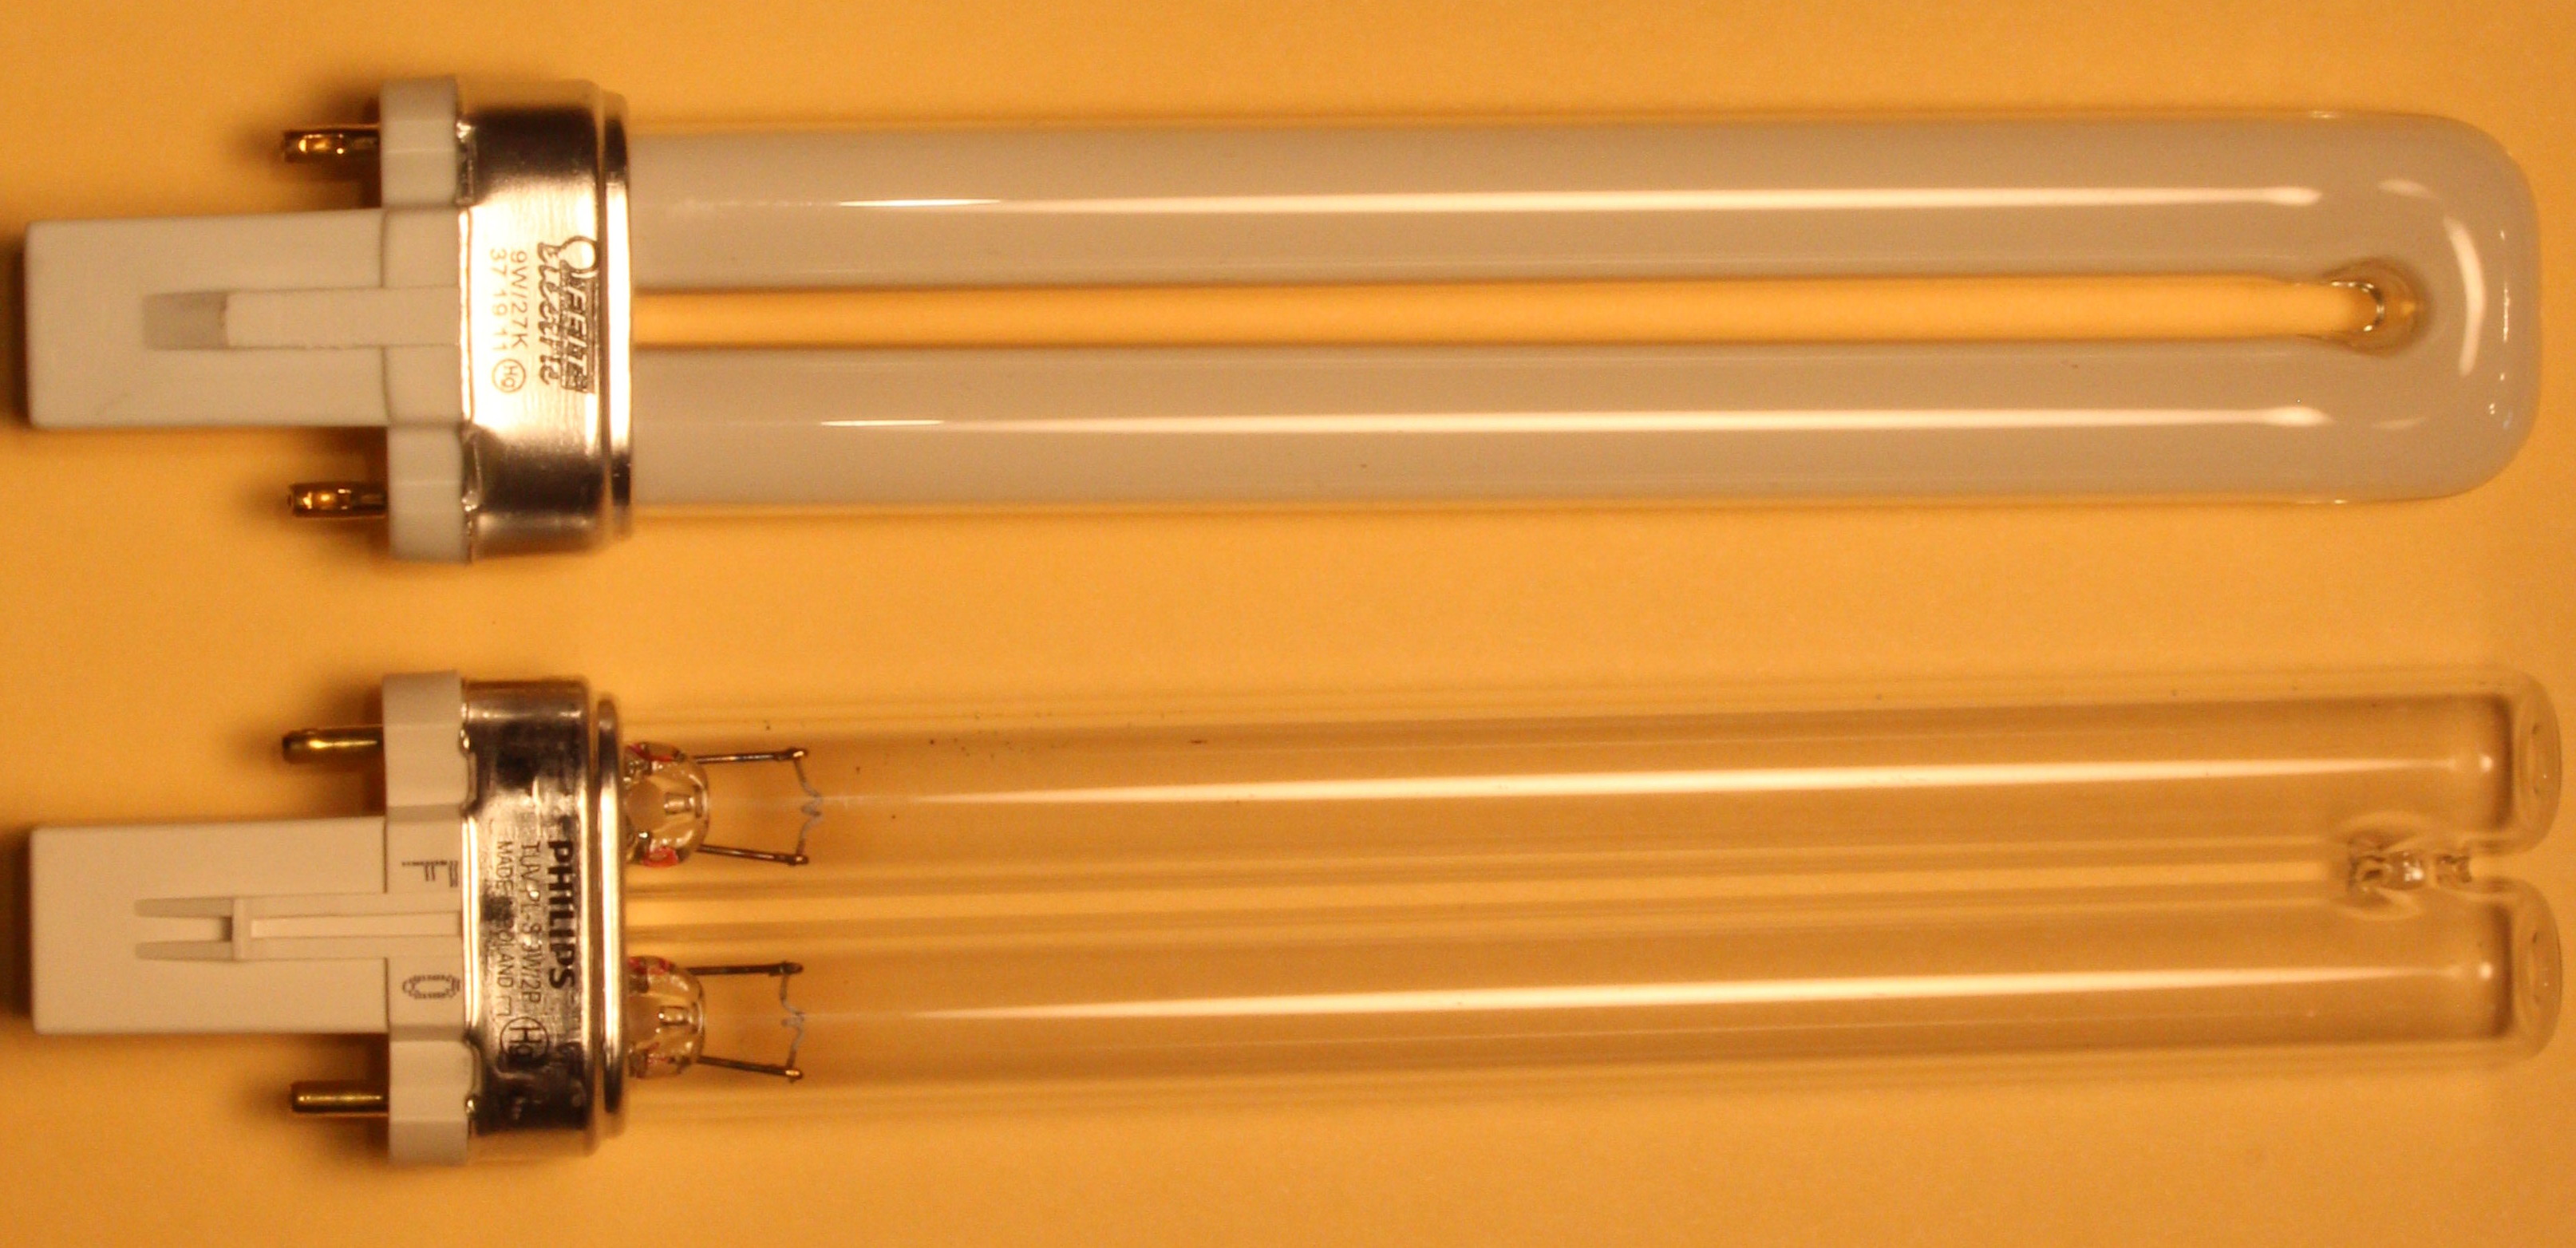 Regular fluorescent lamp (top) and a germicidal UVC lamp (bottom)